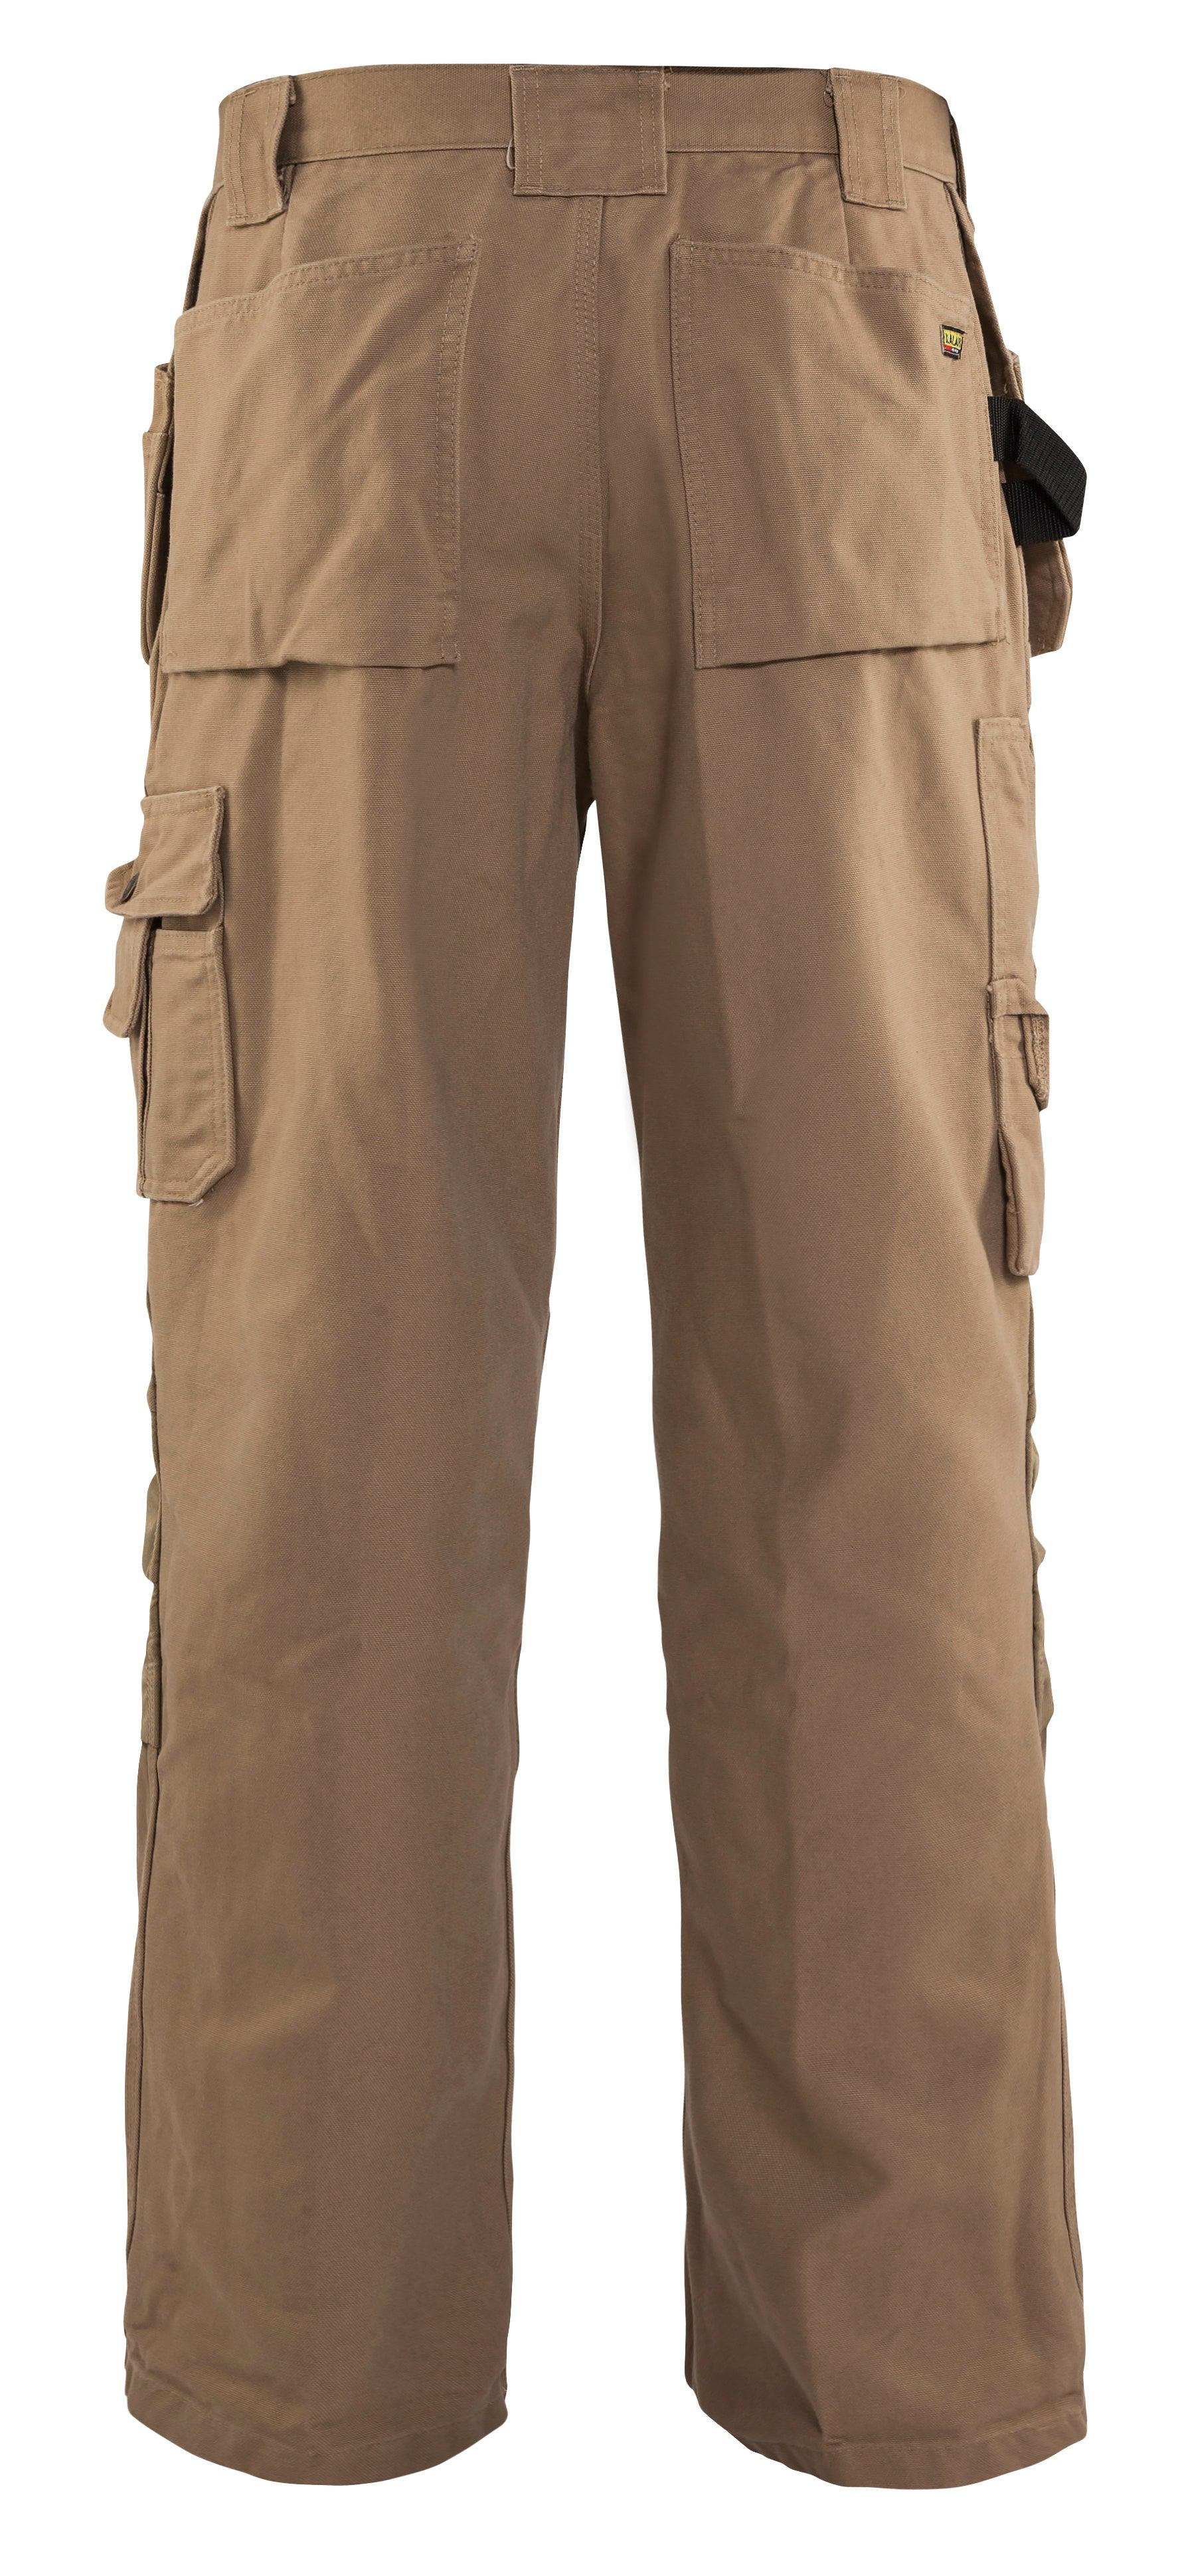 Blaklader 1630 12oz Brawny Work Pants with Utility Pockets - Antique Khaki - Trusted Gear Company LLC